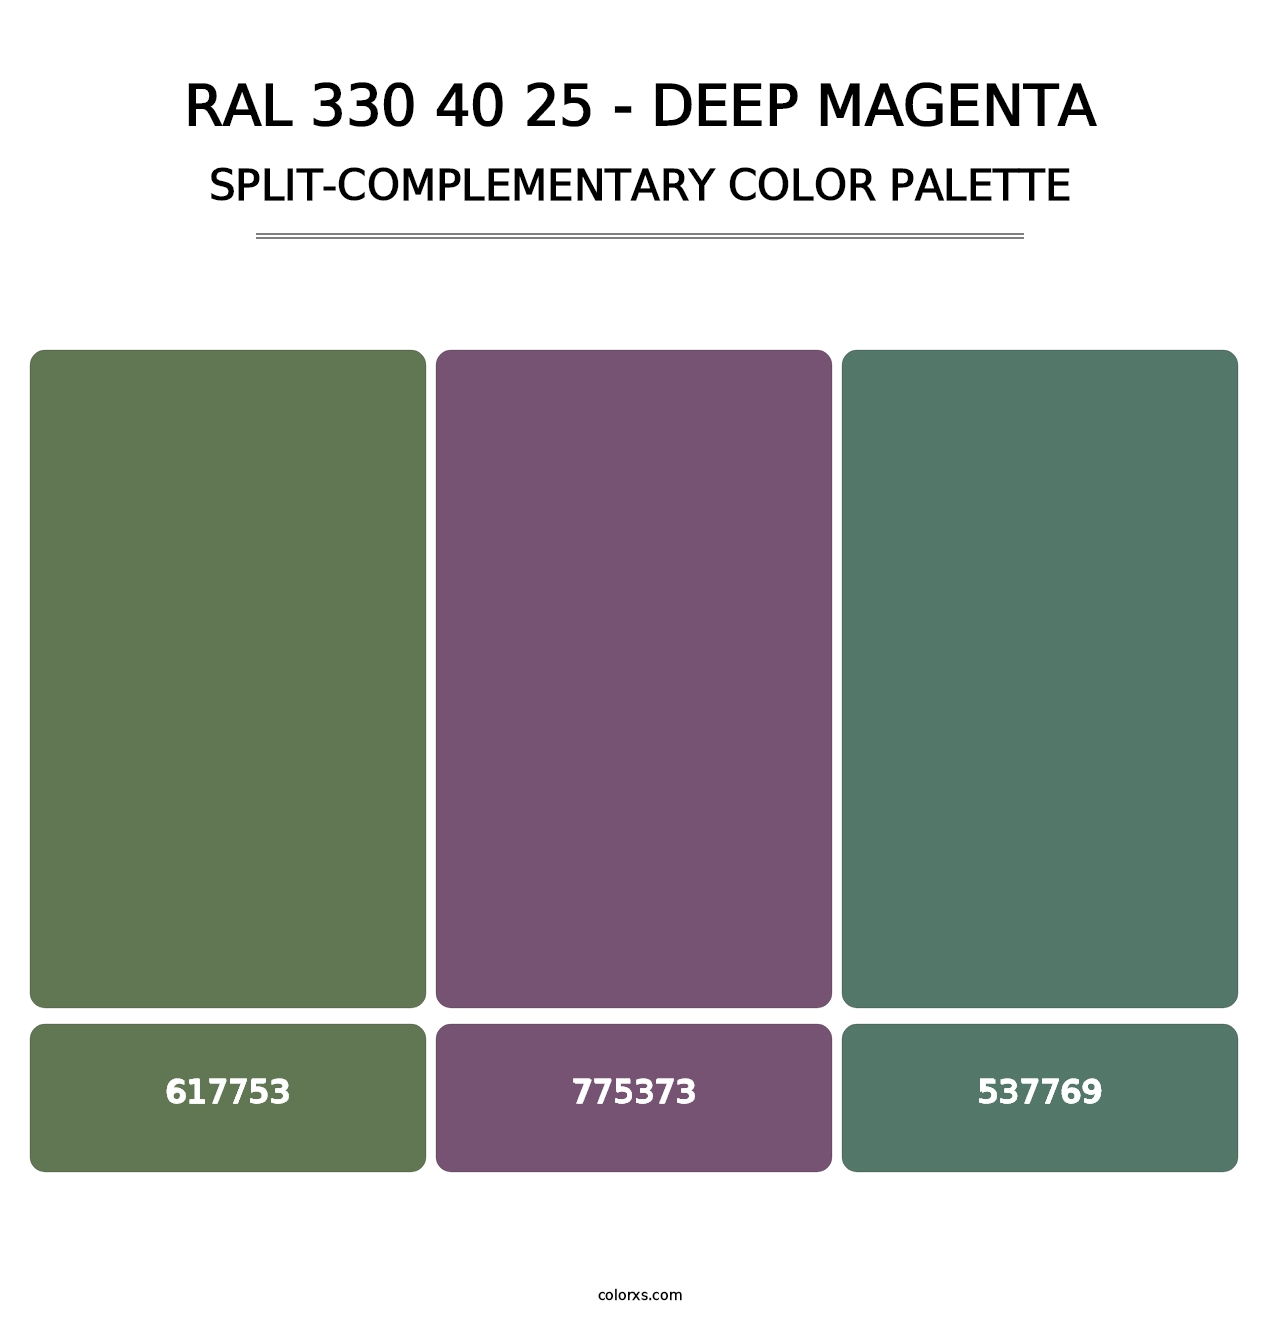 RAL 330 40 25 - Deep Magenta - Split-Complementary Color Palette